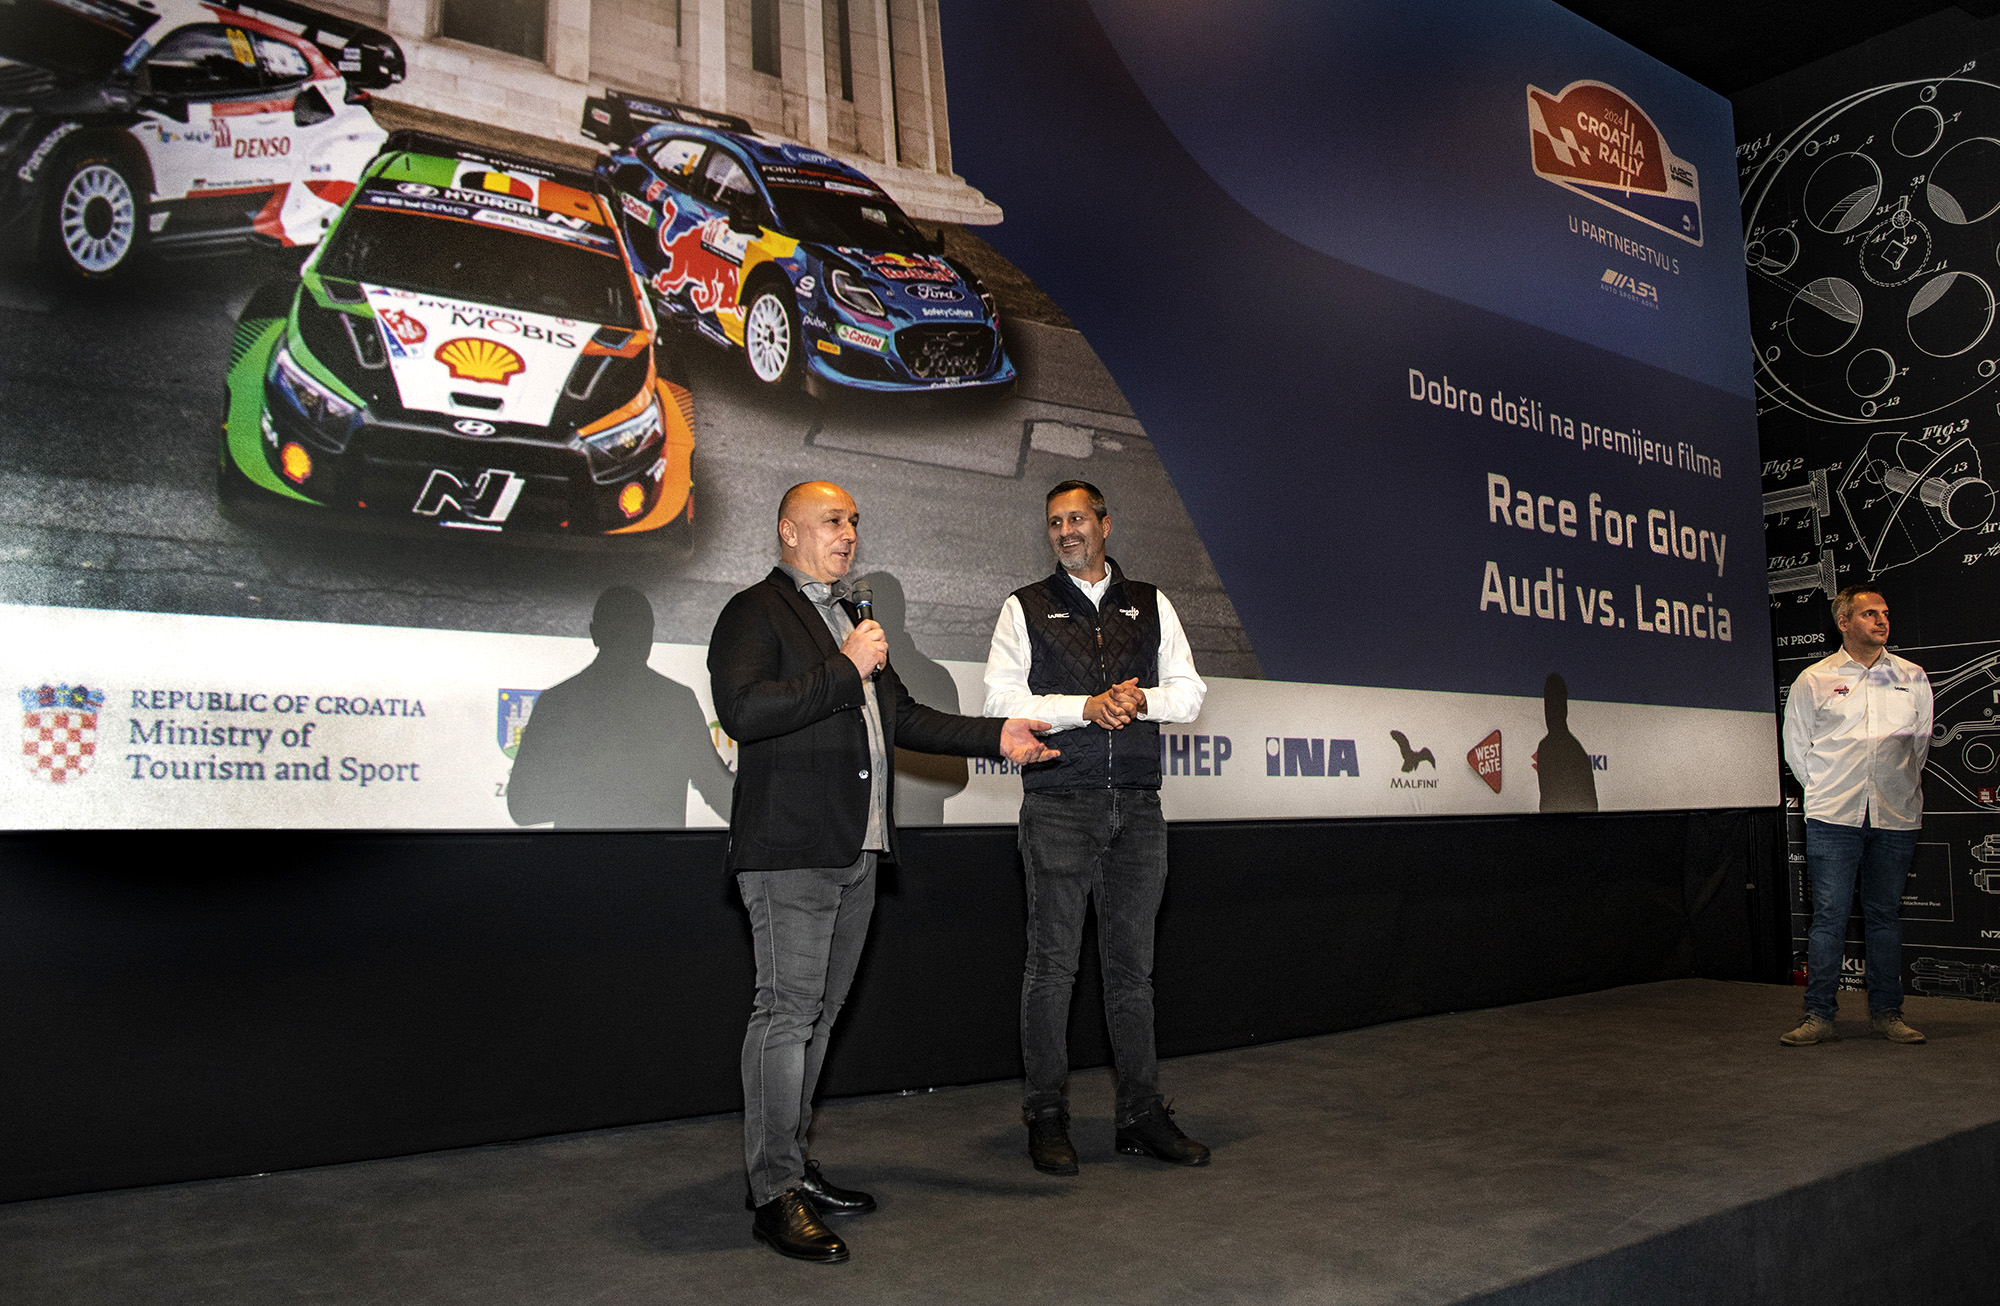 Race for Glory: Audi vs. Lancia - movie Premiere, Zagreb, Croatia - 2